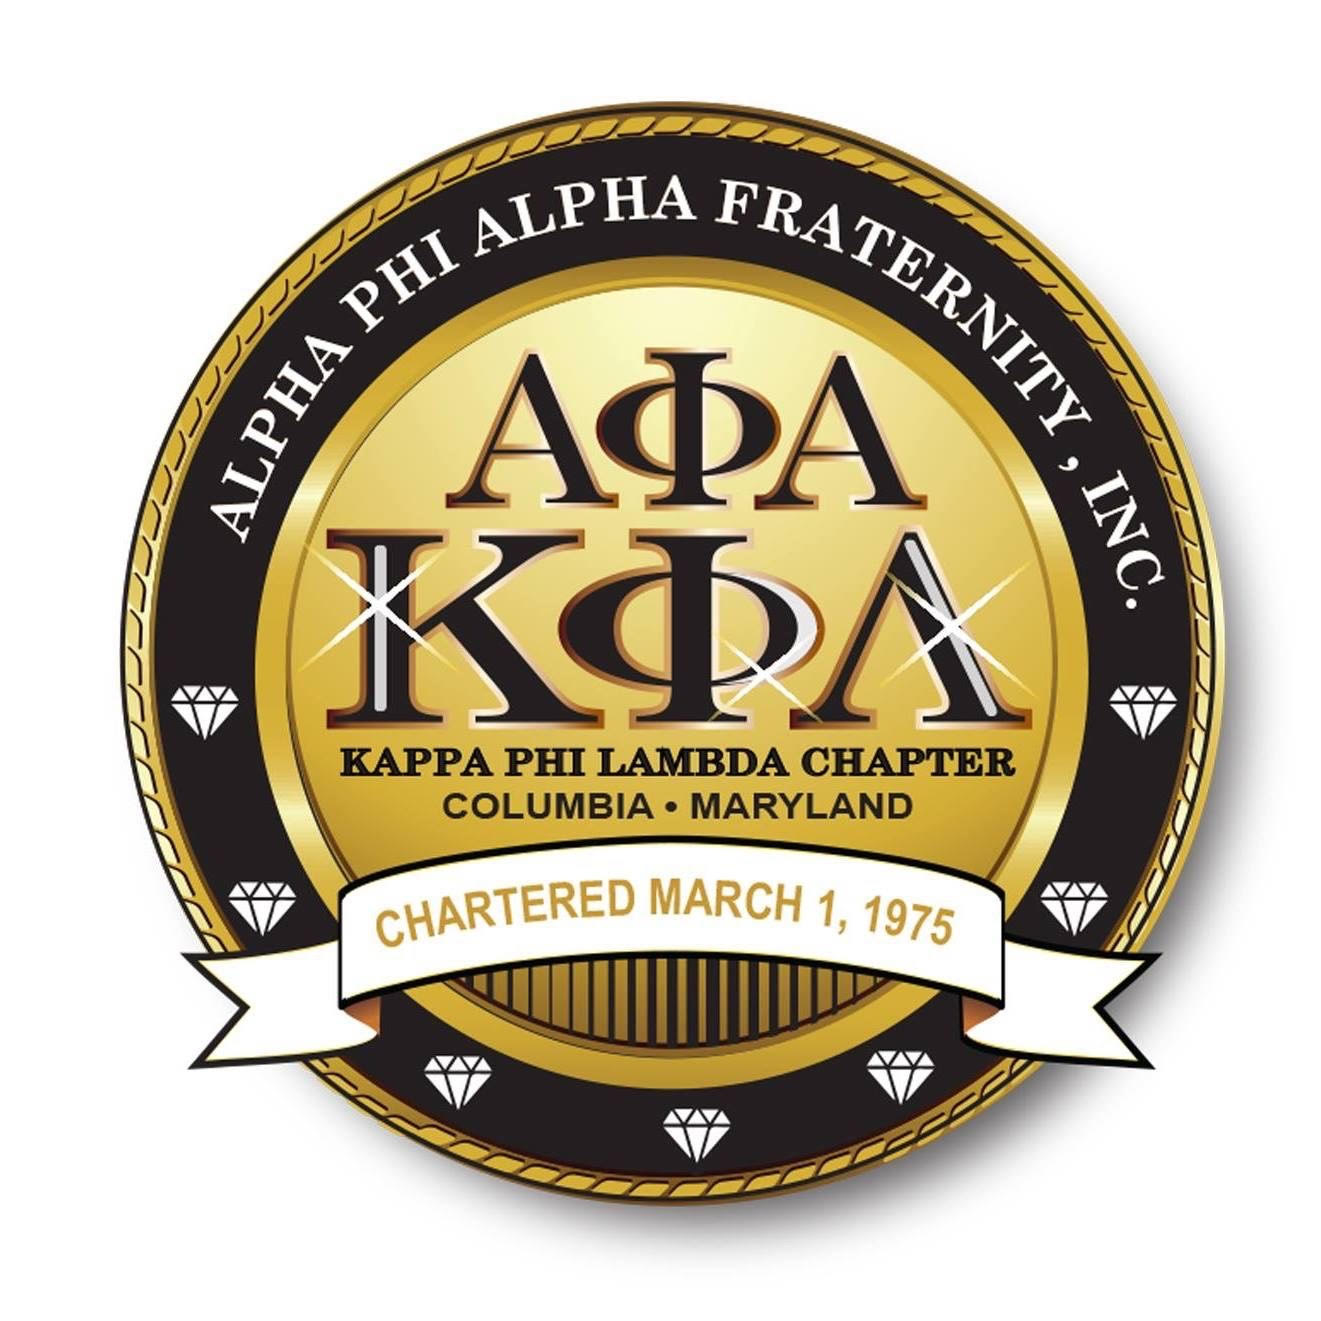 AlphaPhiKappa logo